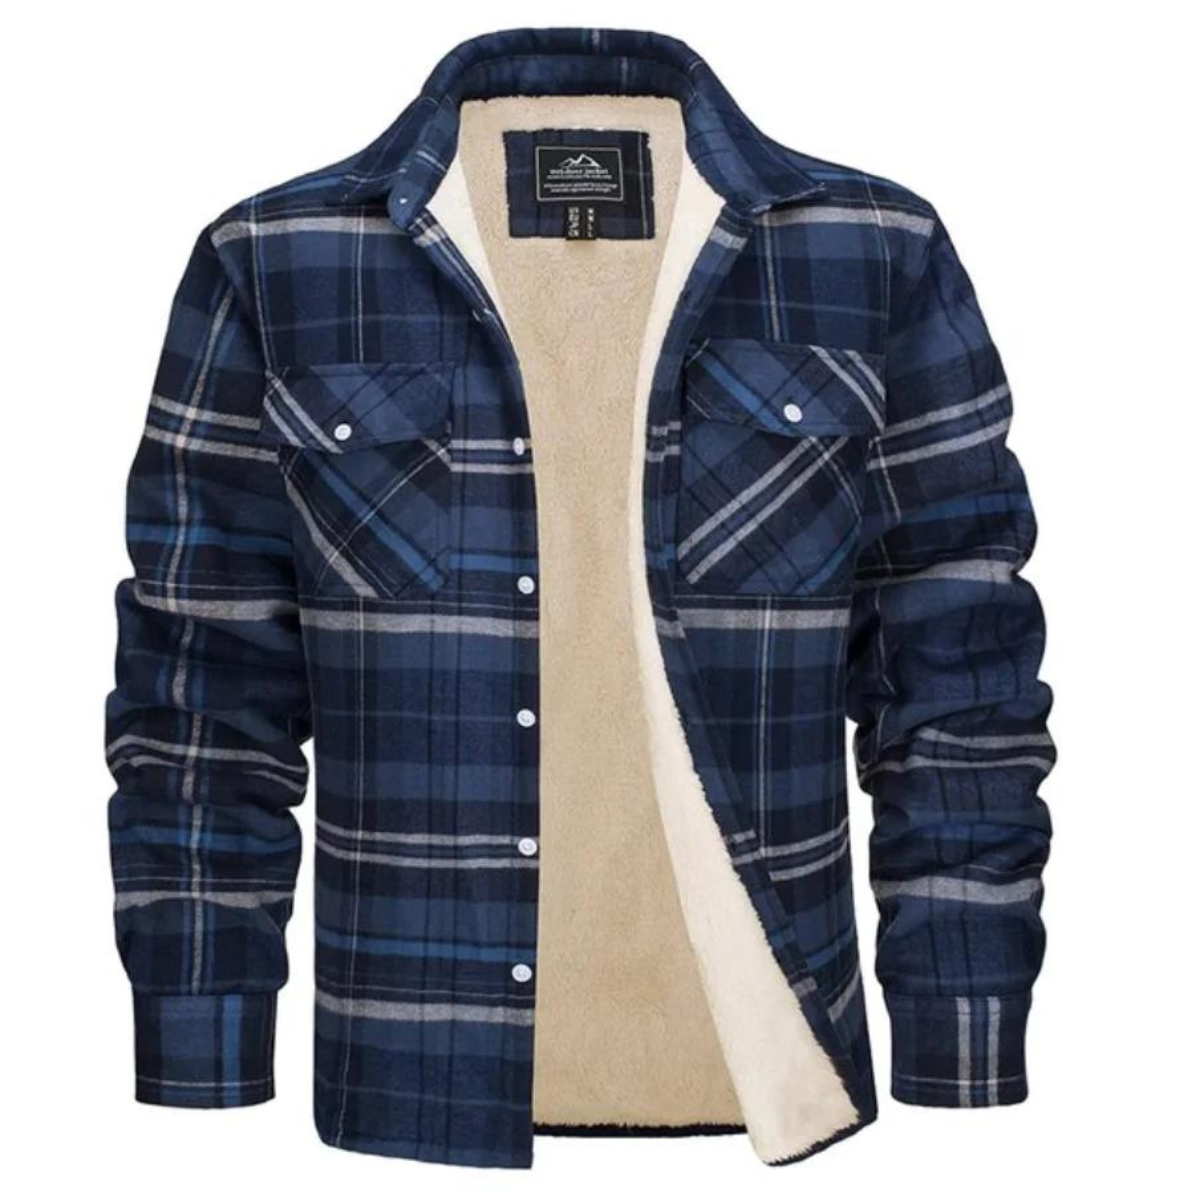 Cody | Fleece-Lined Checkered Jacket